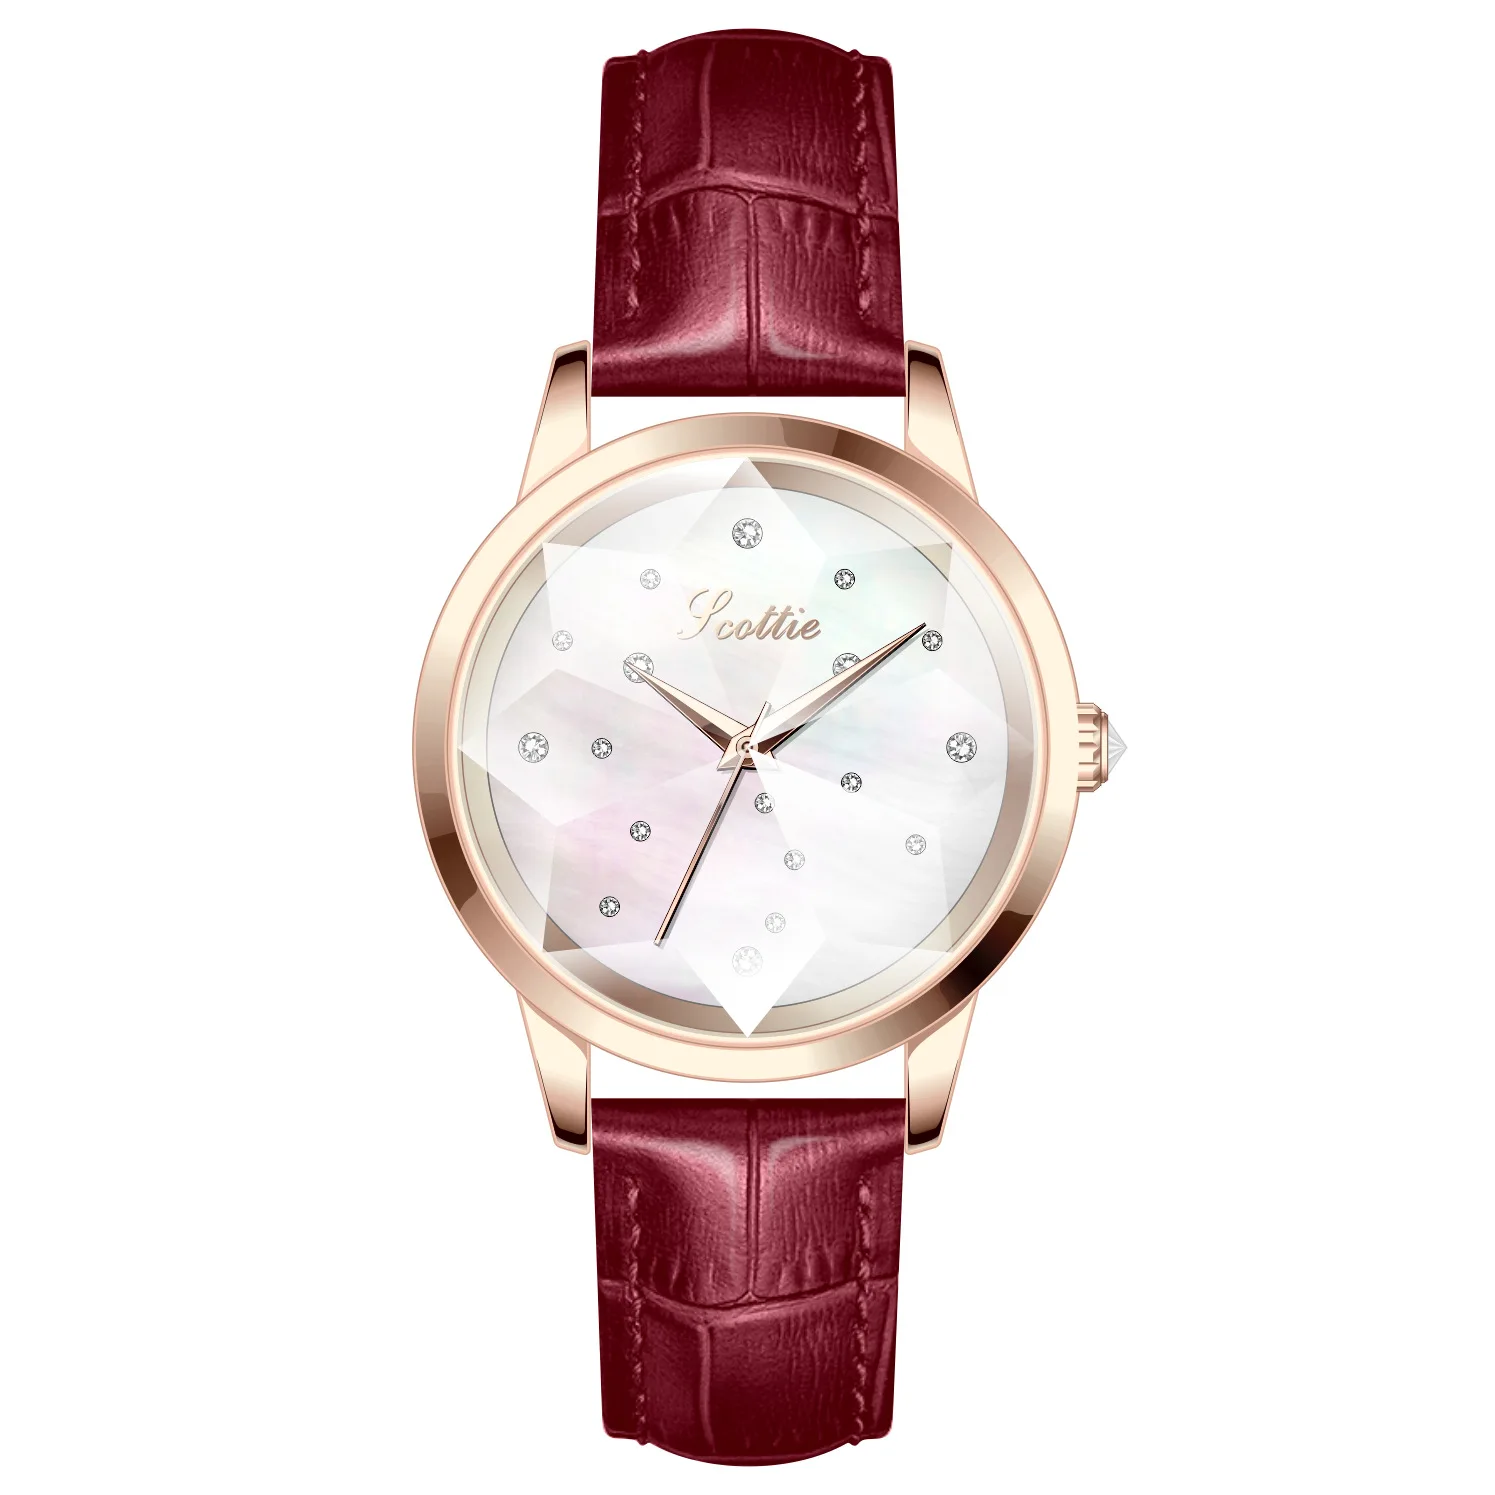 

Pretty Luxury Waterproof Watches For Women Fashion Quartz Watch Square Relogio Feminino Luxe Reloj Mujer Cadeau Femme Gifts